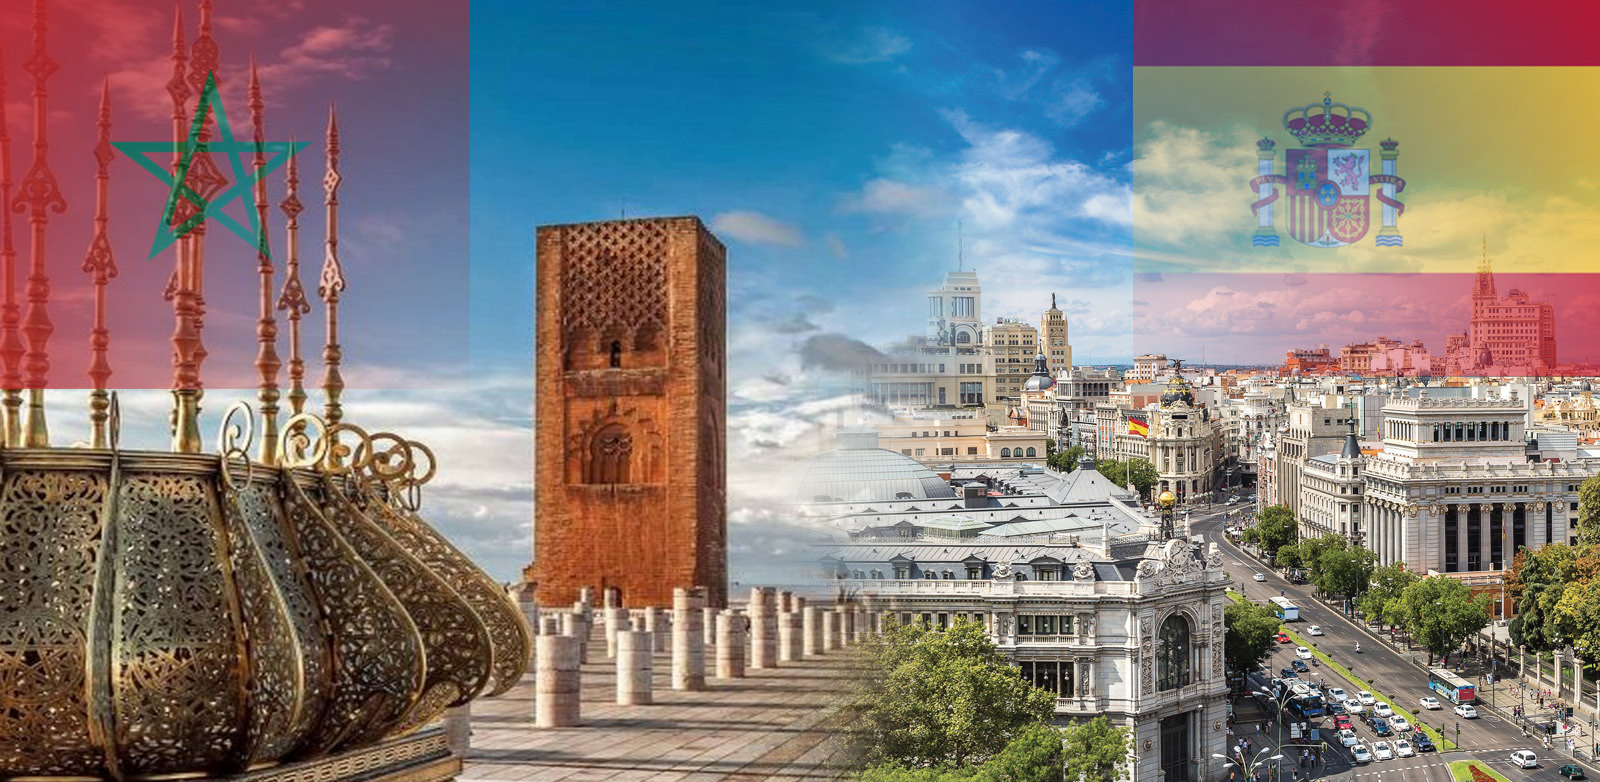 Morocco, Spain discuss circular economy, tourism